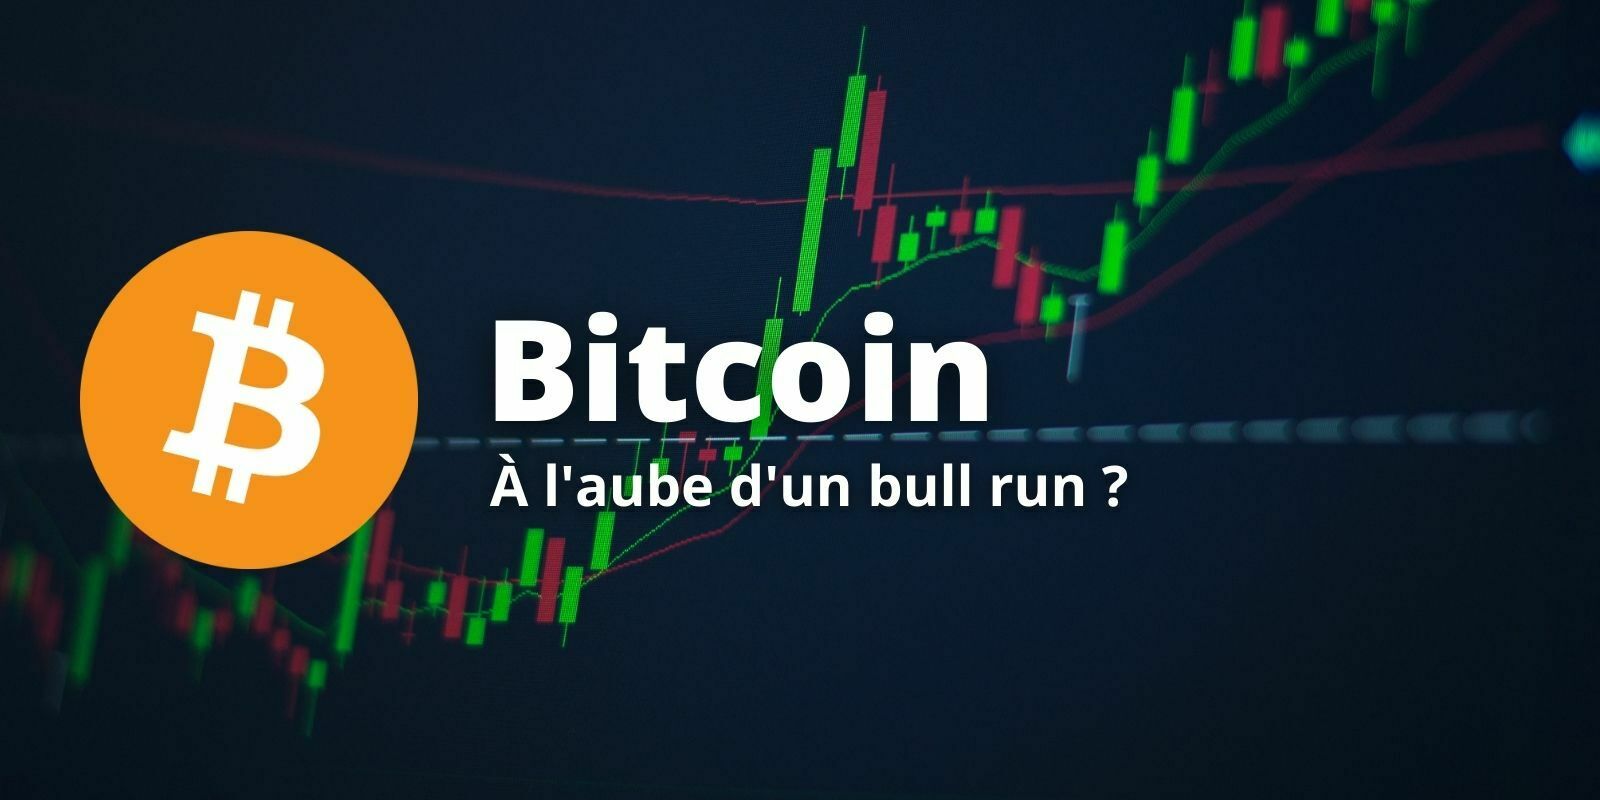 Bitcoin (BTC) - Starting-block sous les 11 500 $ avant le prochain bull run ?